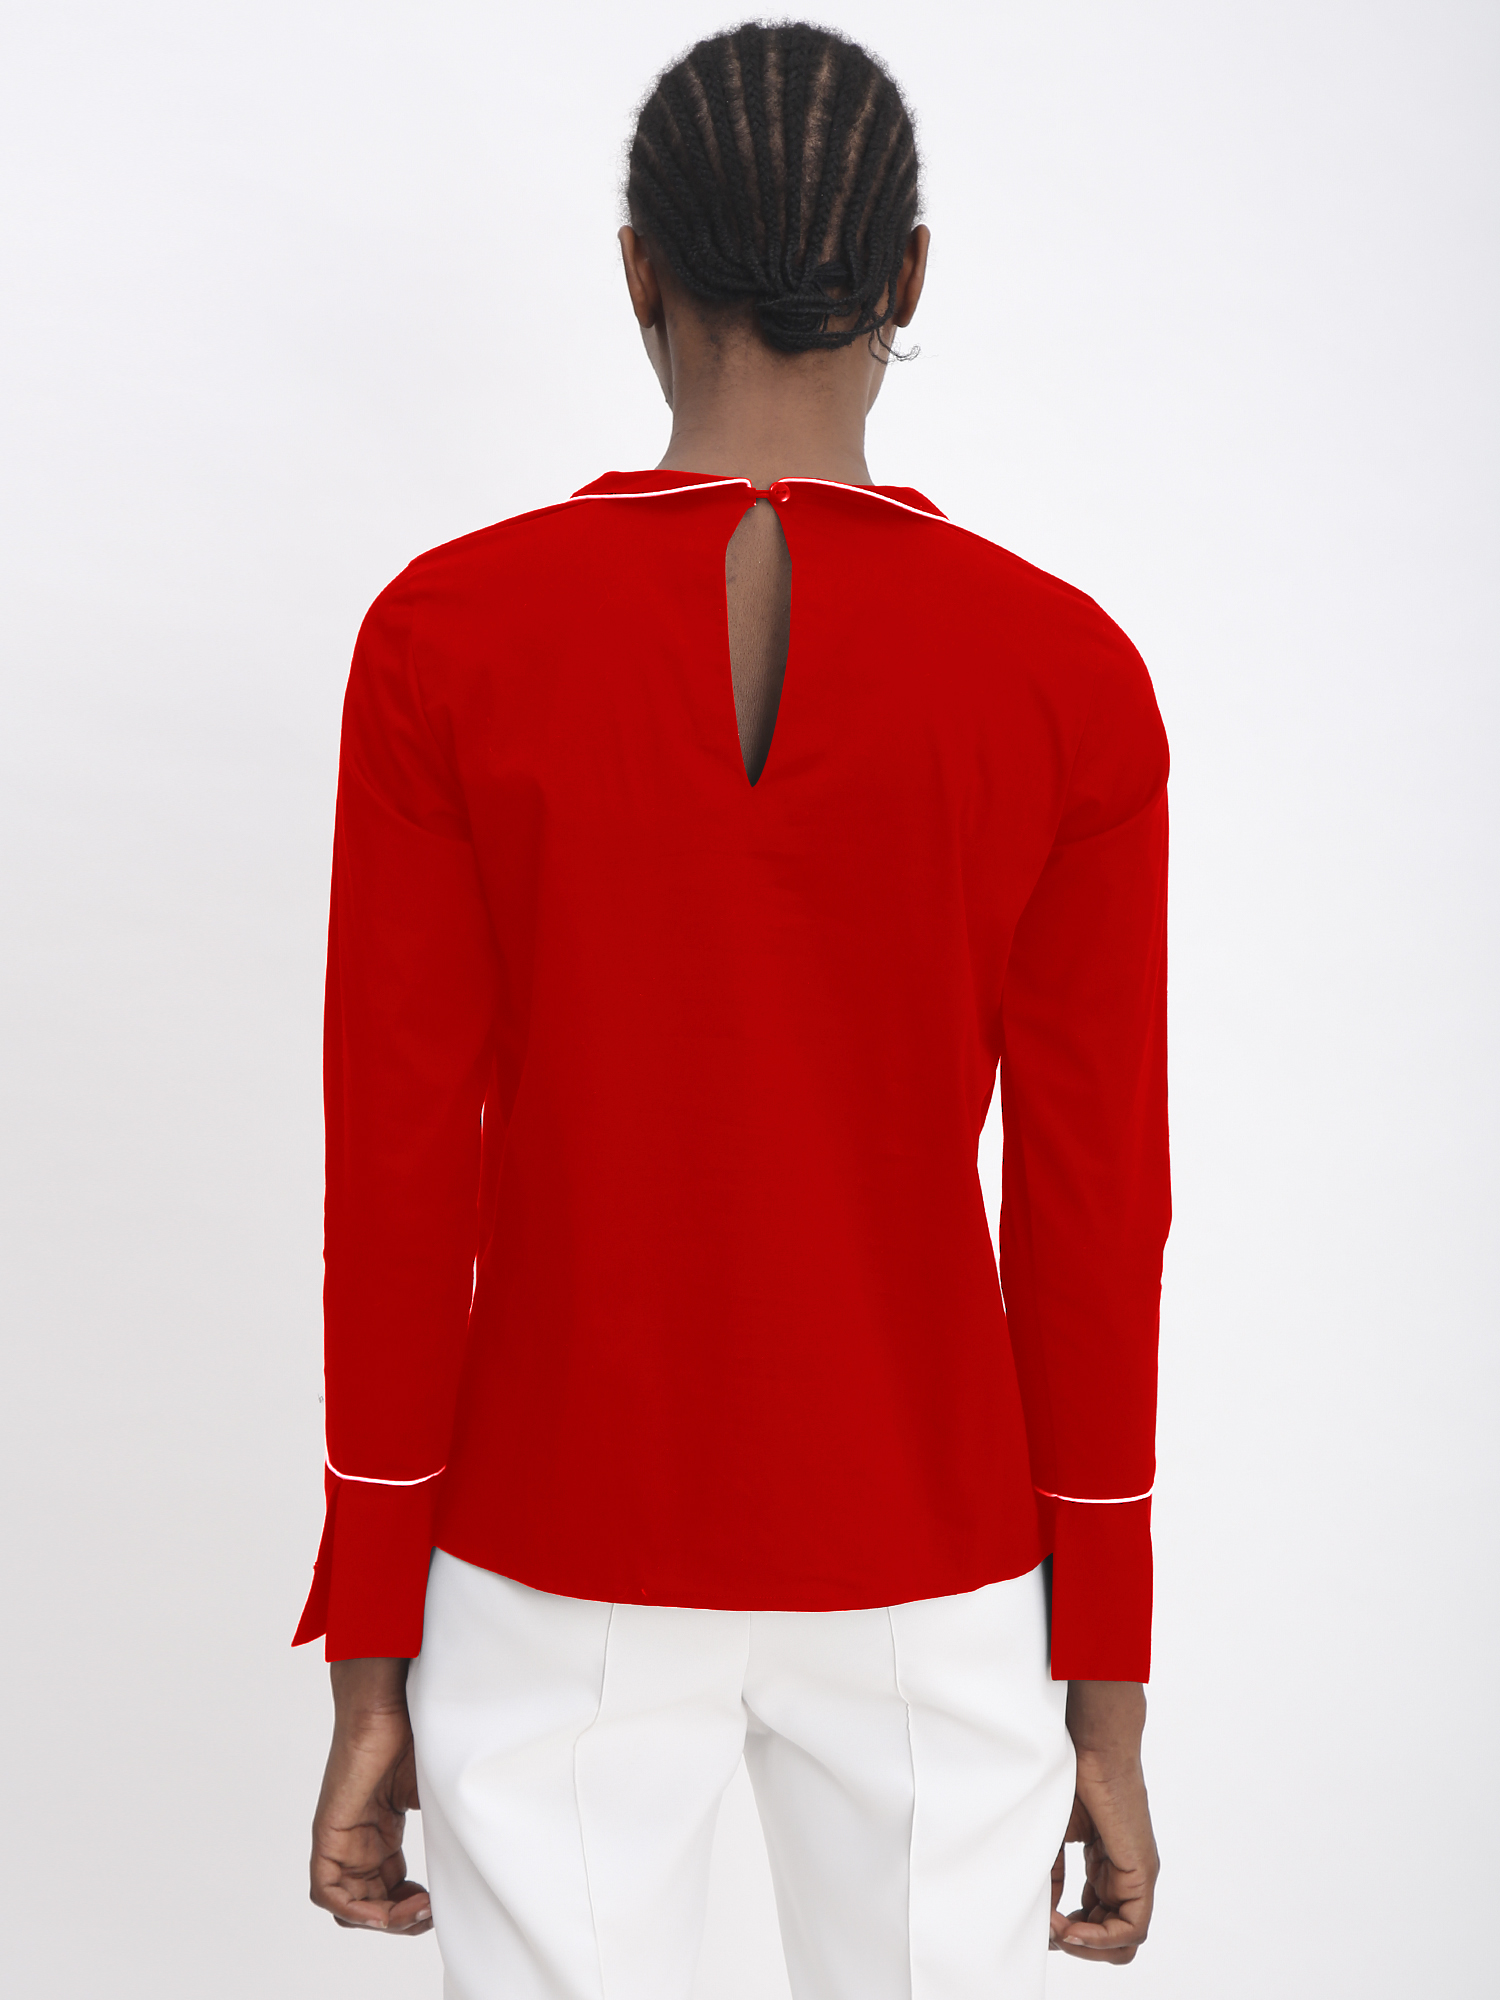 Peter-Pan Contrast Shirt Red - Back